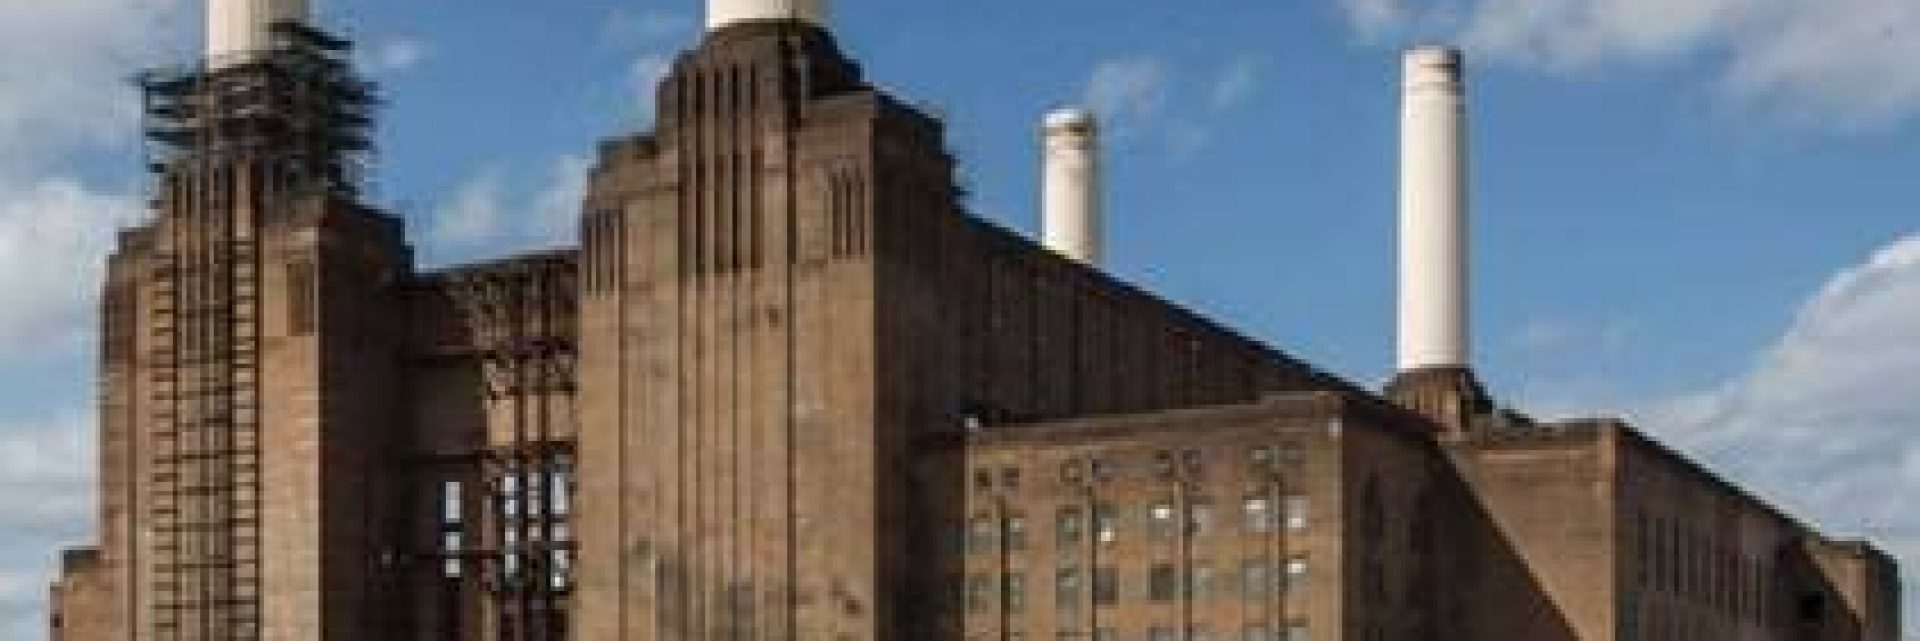 Hilti jobsite reference battersea power station London UK